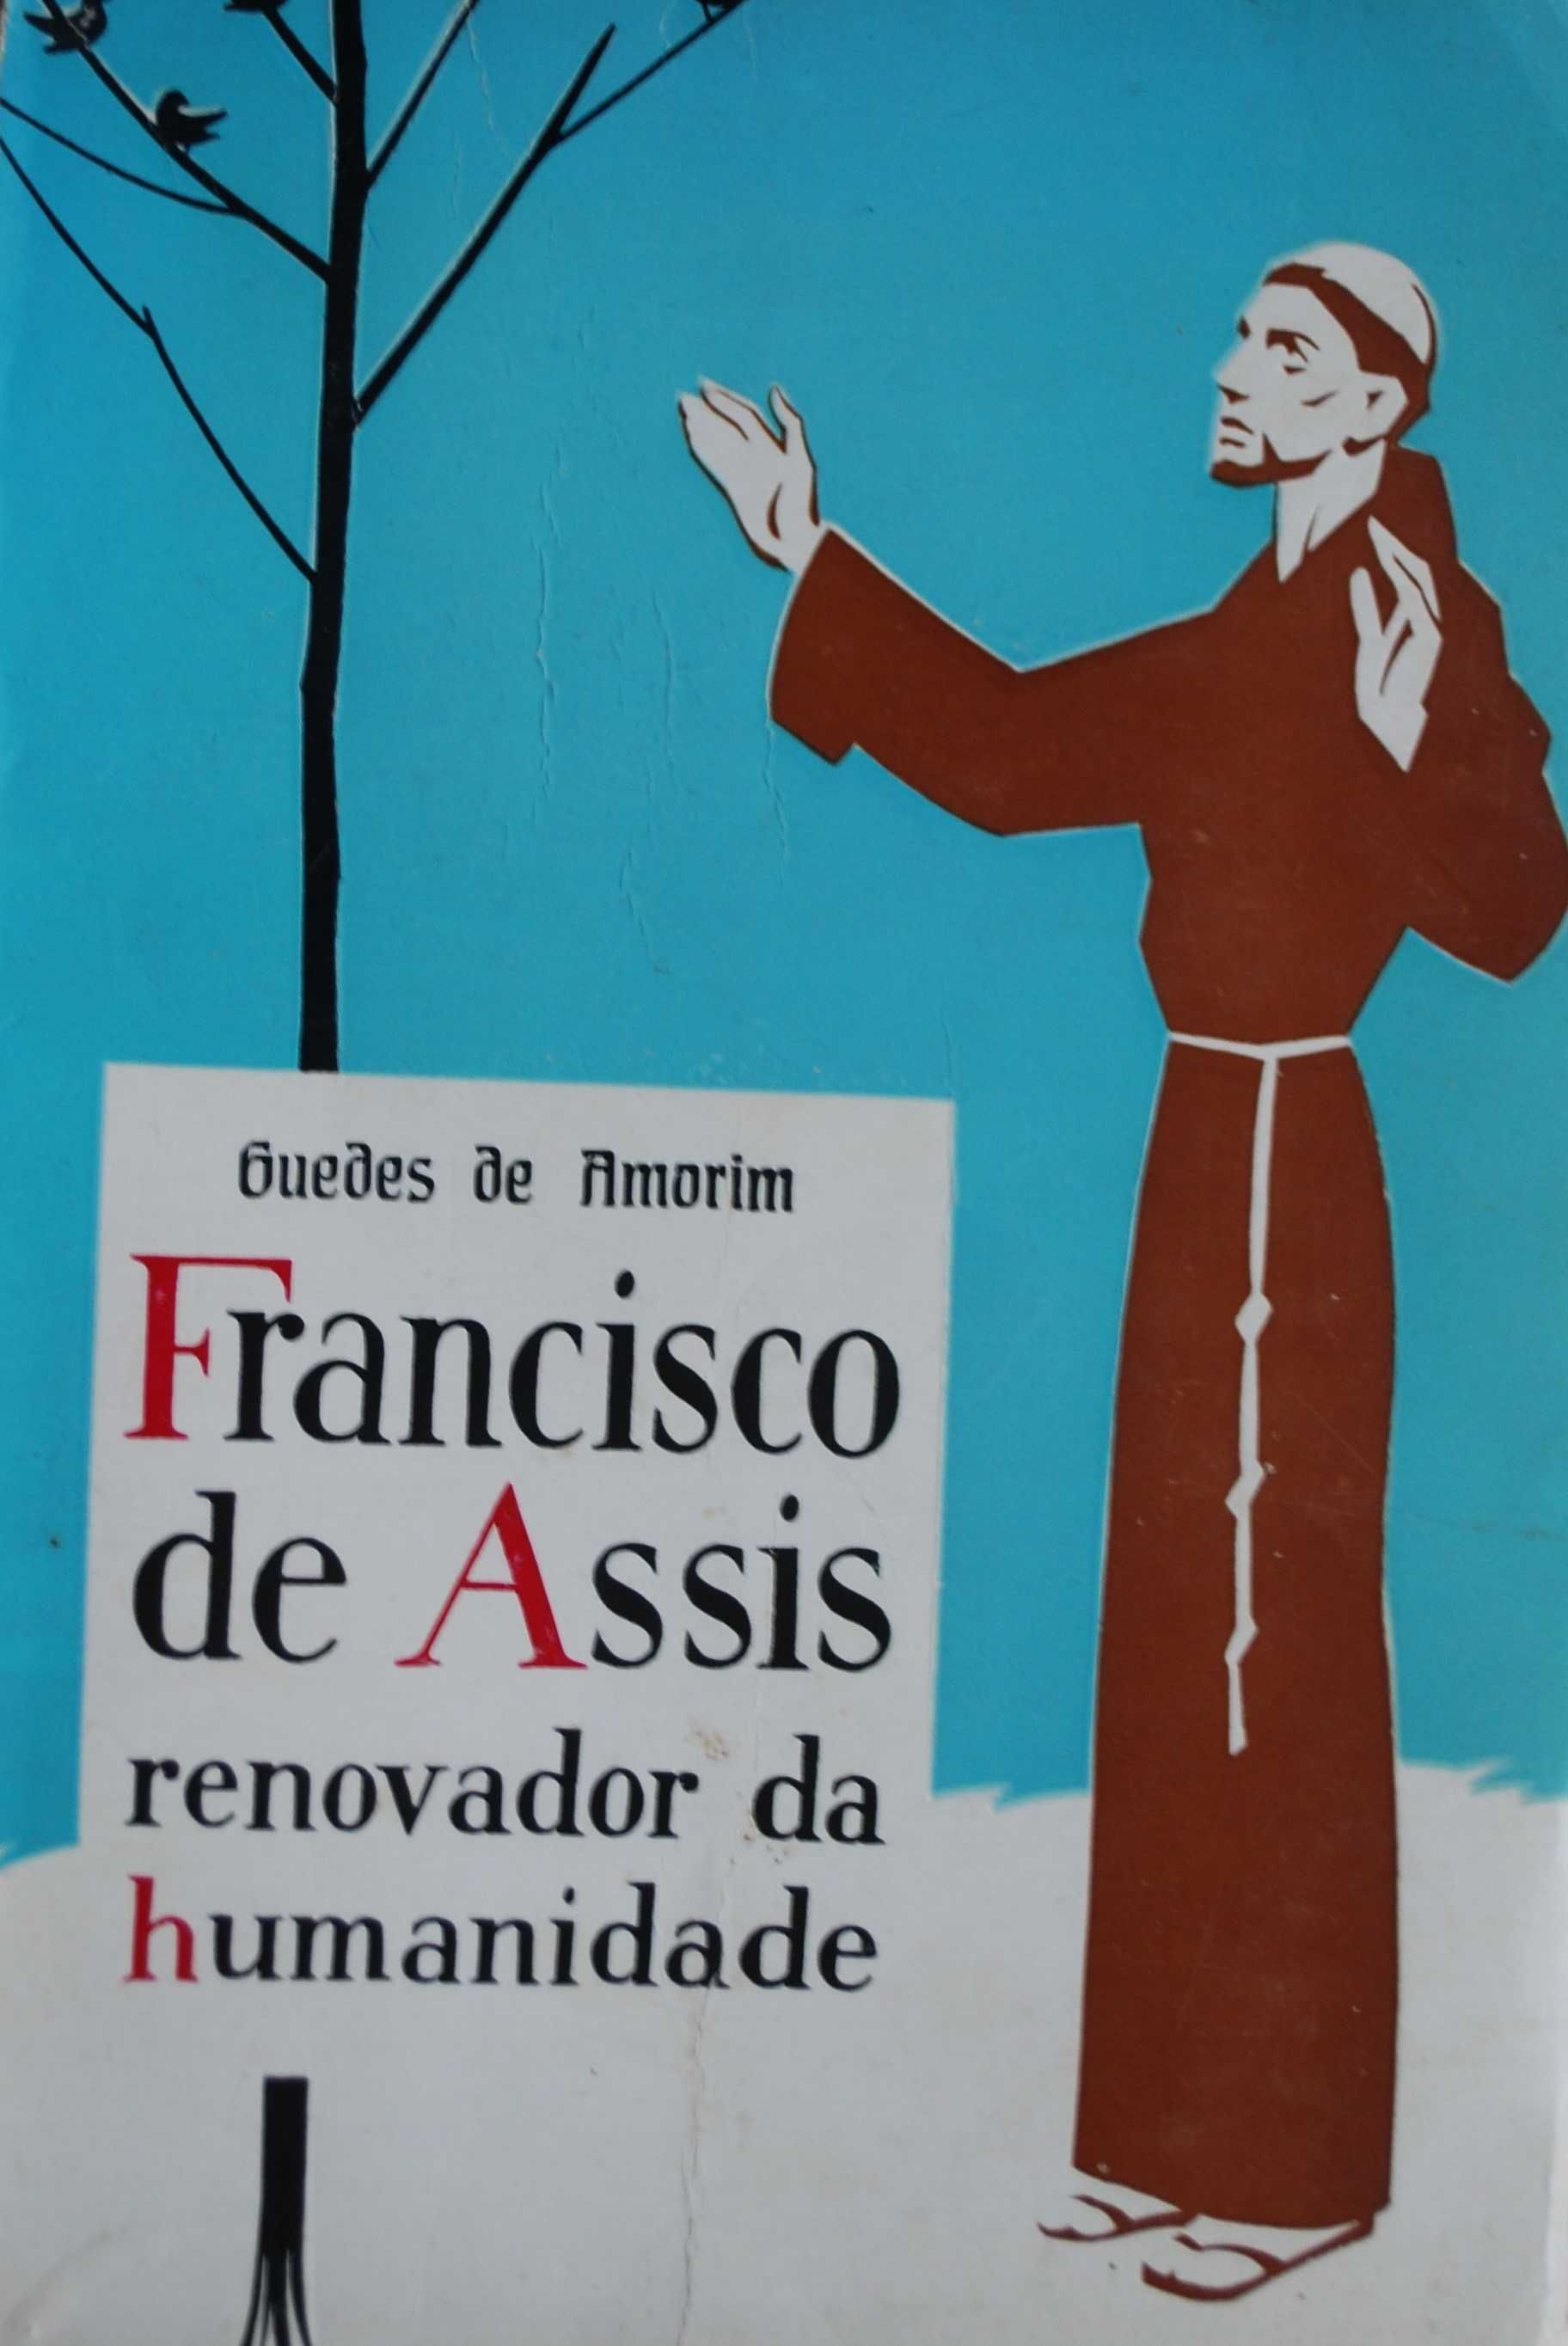 Francisco de Assis Renovador da Humanidade de Guedes de Amorim